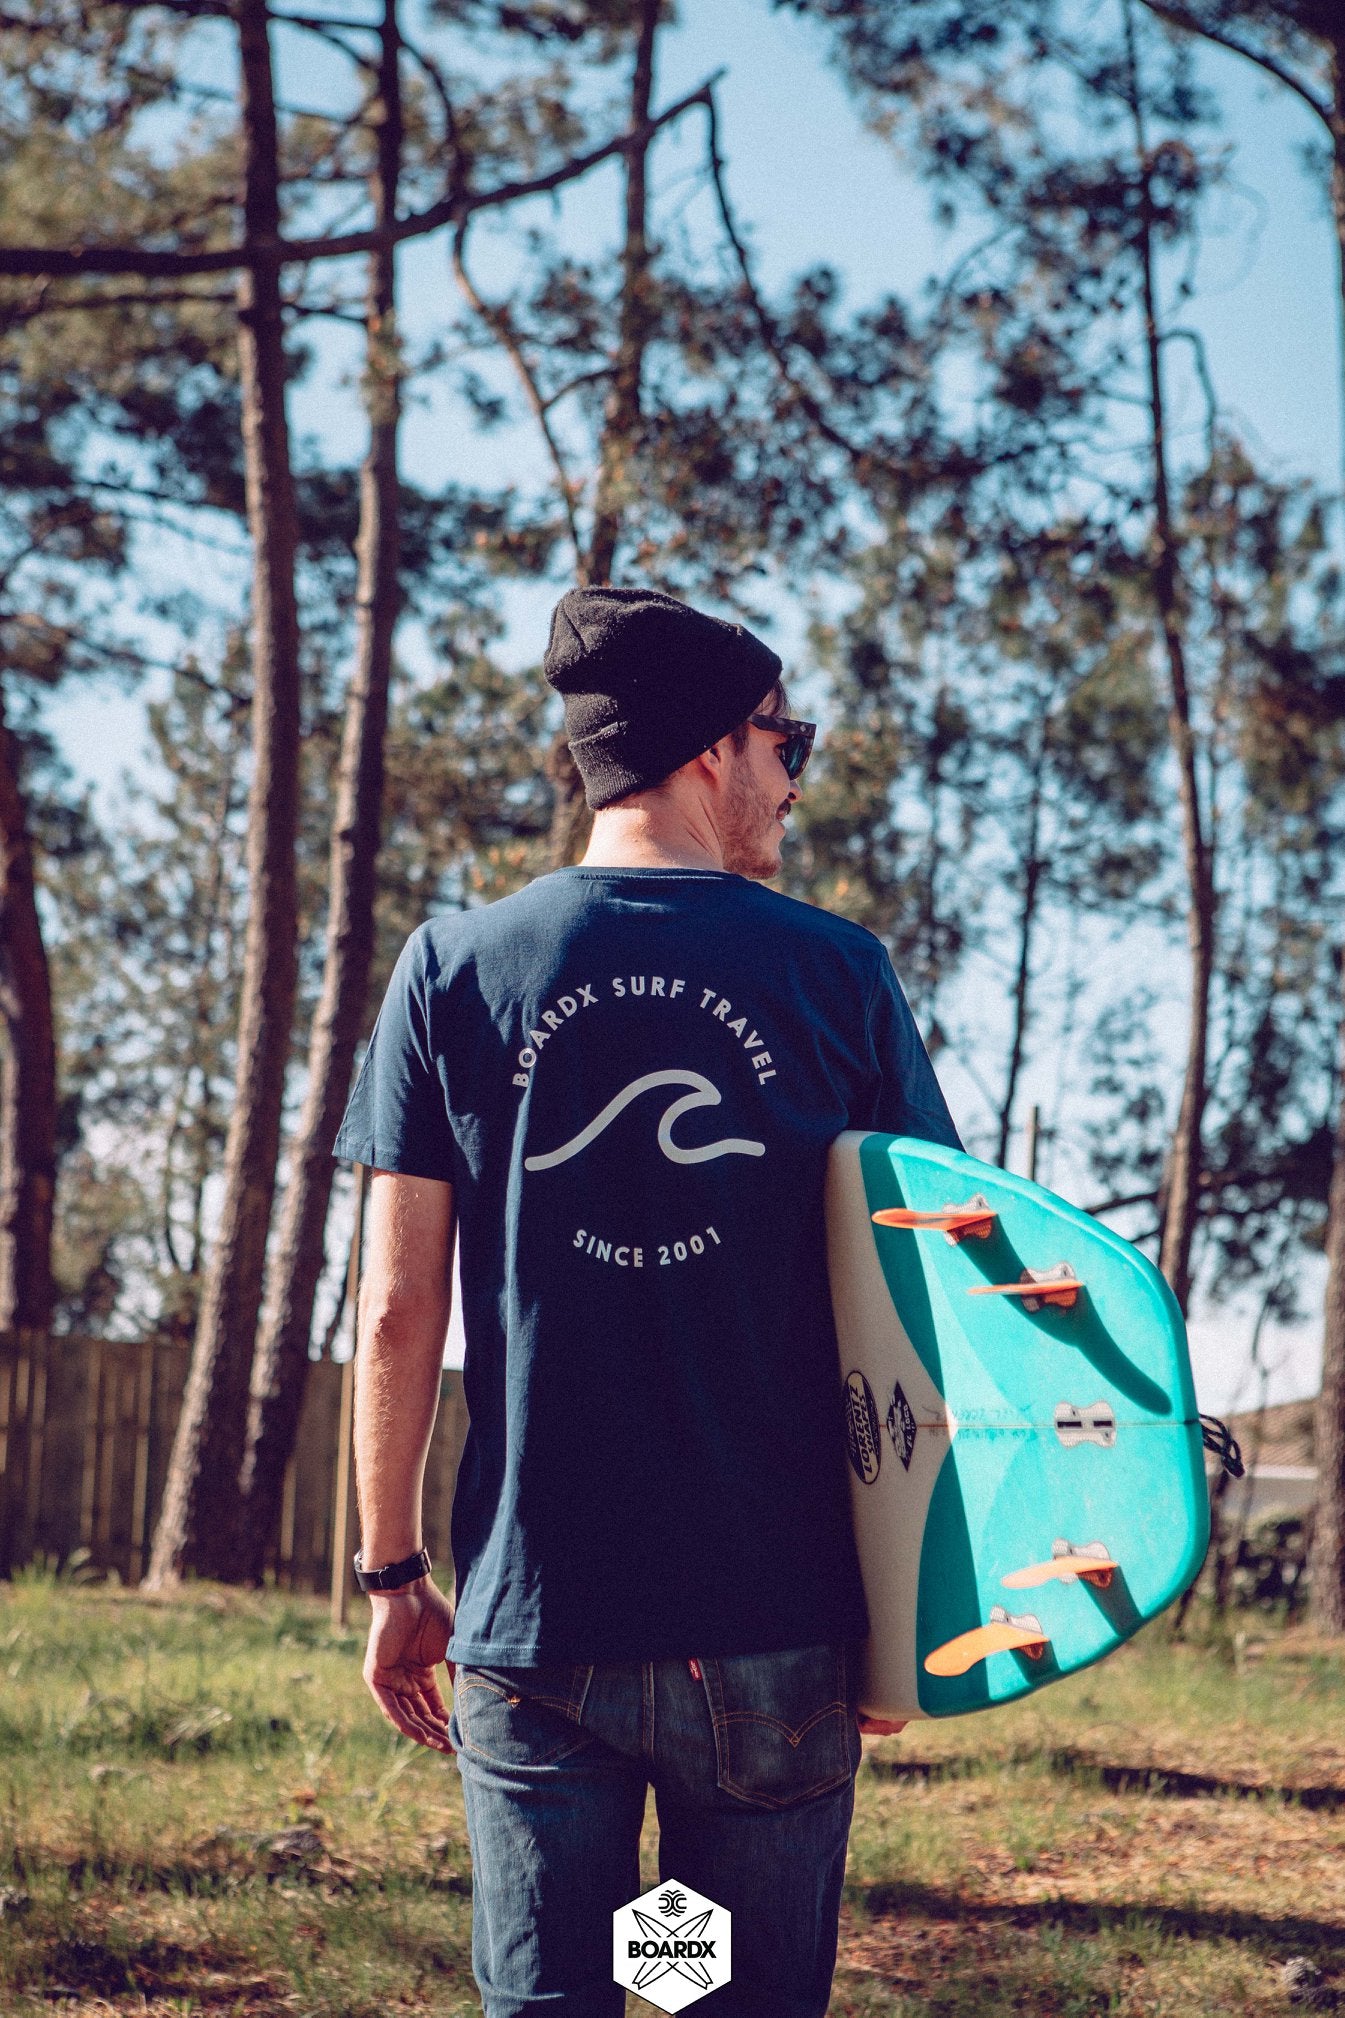 T-shirt - BoardX Surf Travel